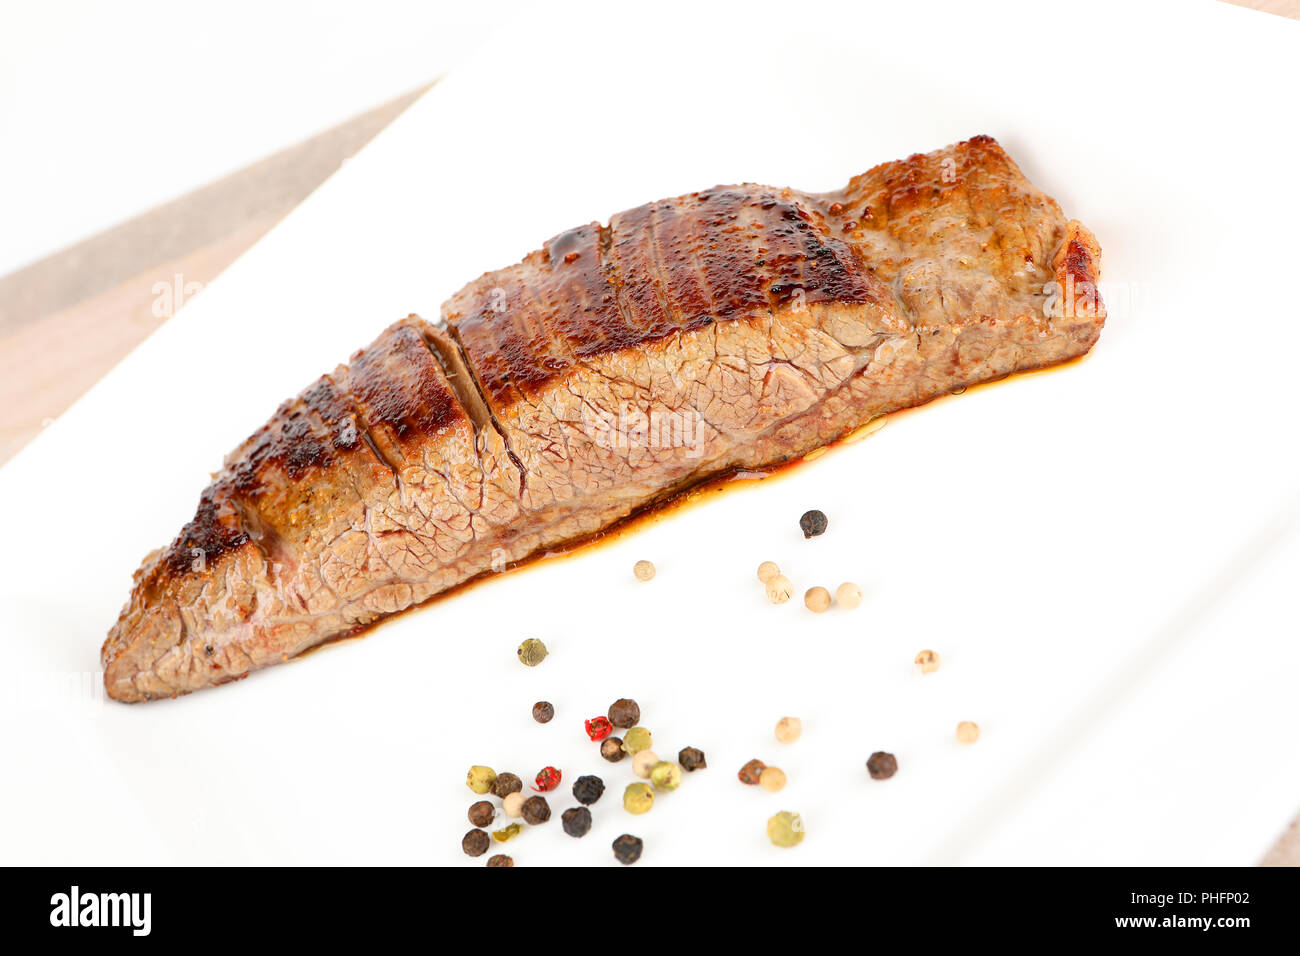 fried flank steak Stock Photo